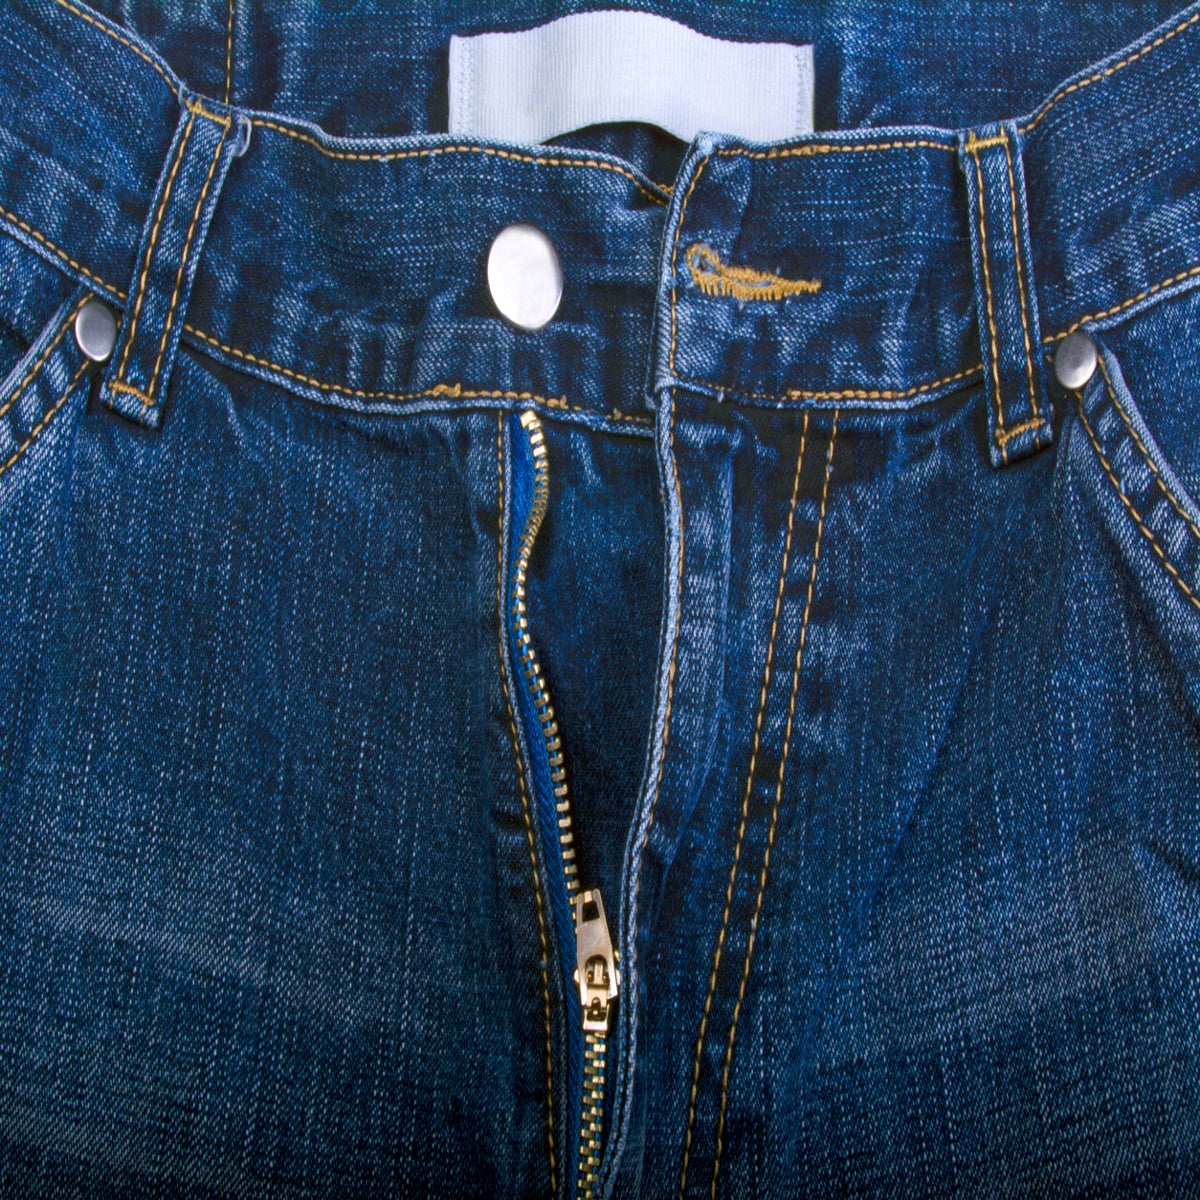 How to Keep Your Pants Zipper Up -- 2 Genius Tricks!